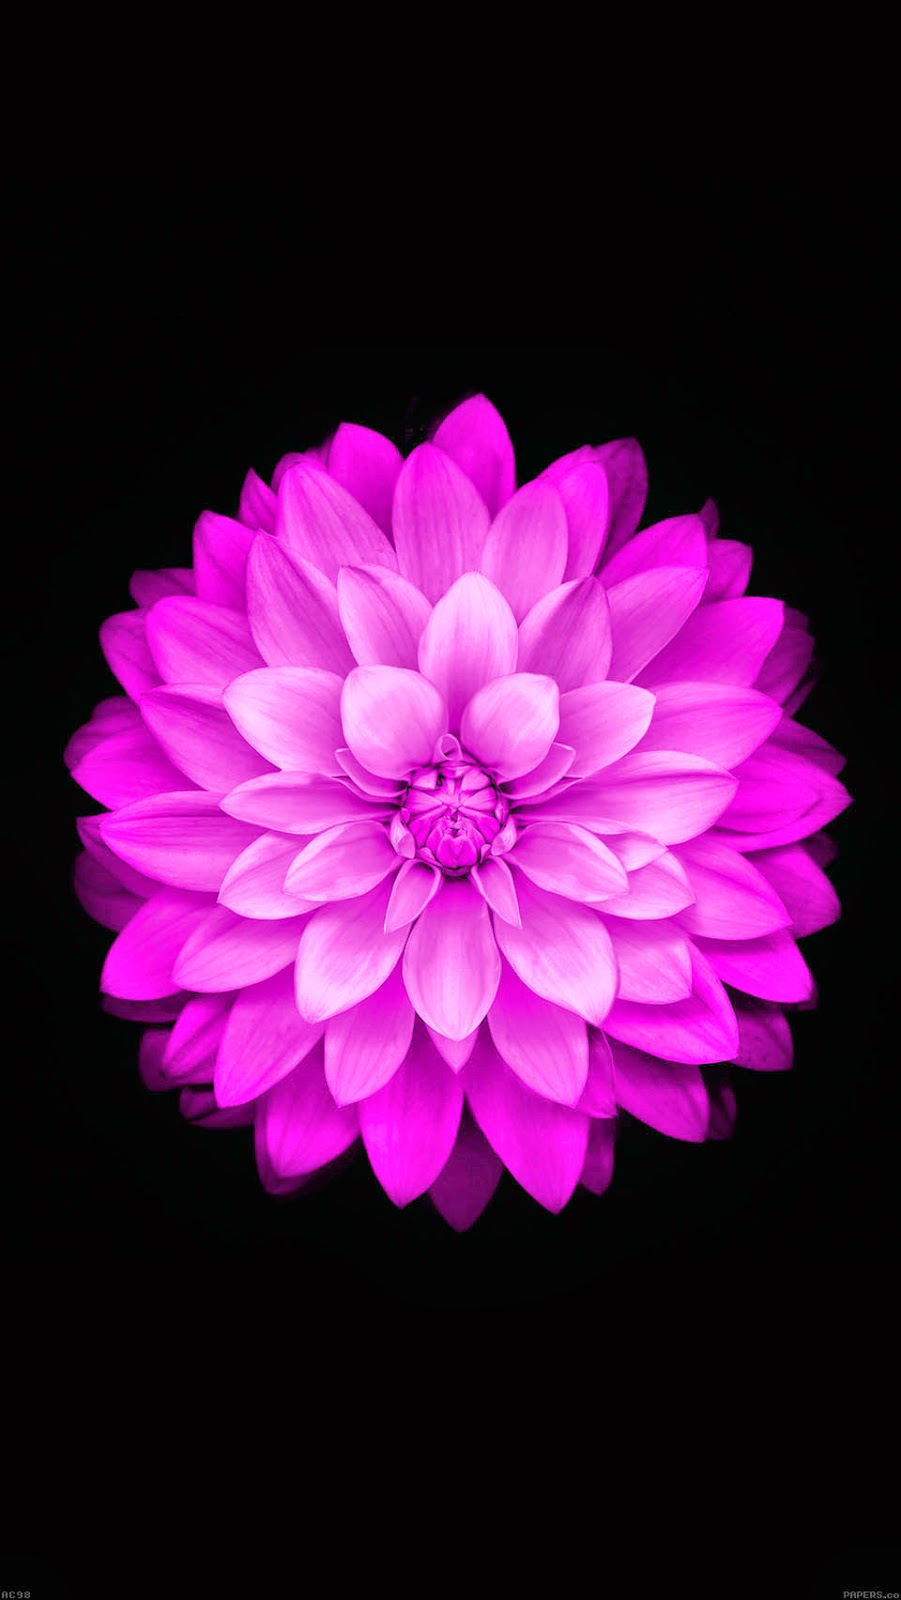 lotus blume iphone wallpaper,blütenblatt,rosa,violett,blume,dahlie